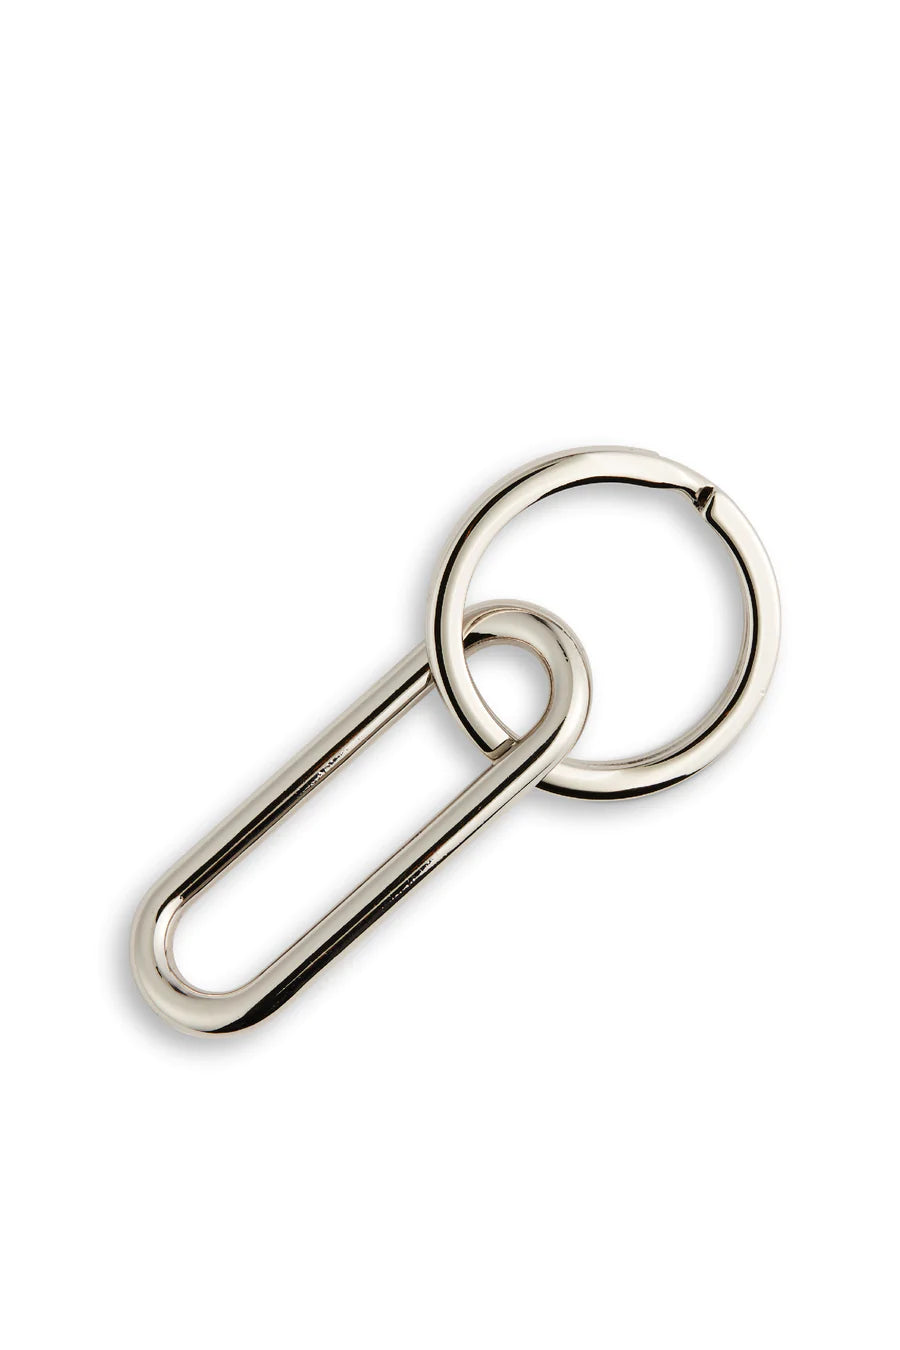 Lisbeth Key Ring No 2 - Silver - Vincent Park - {{shop.address.city}} {{ shop.address.country }}